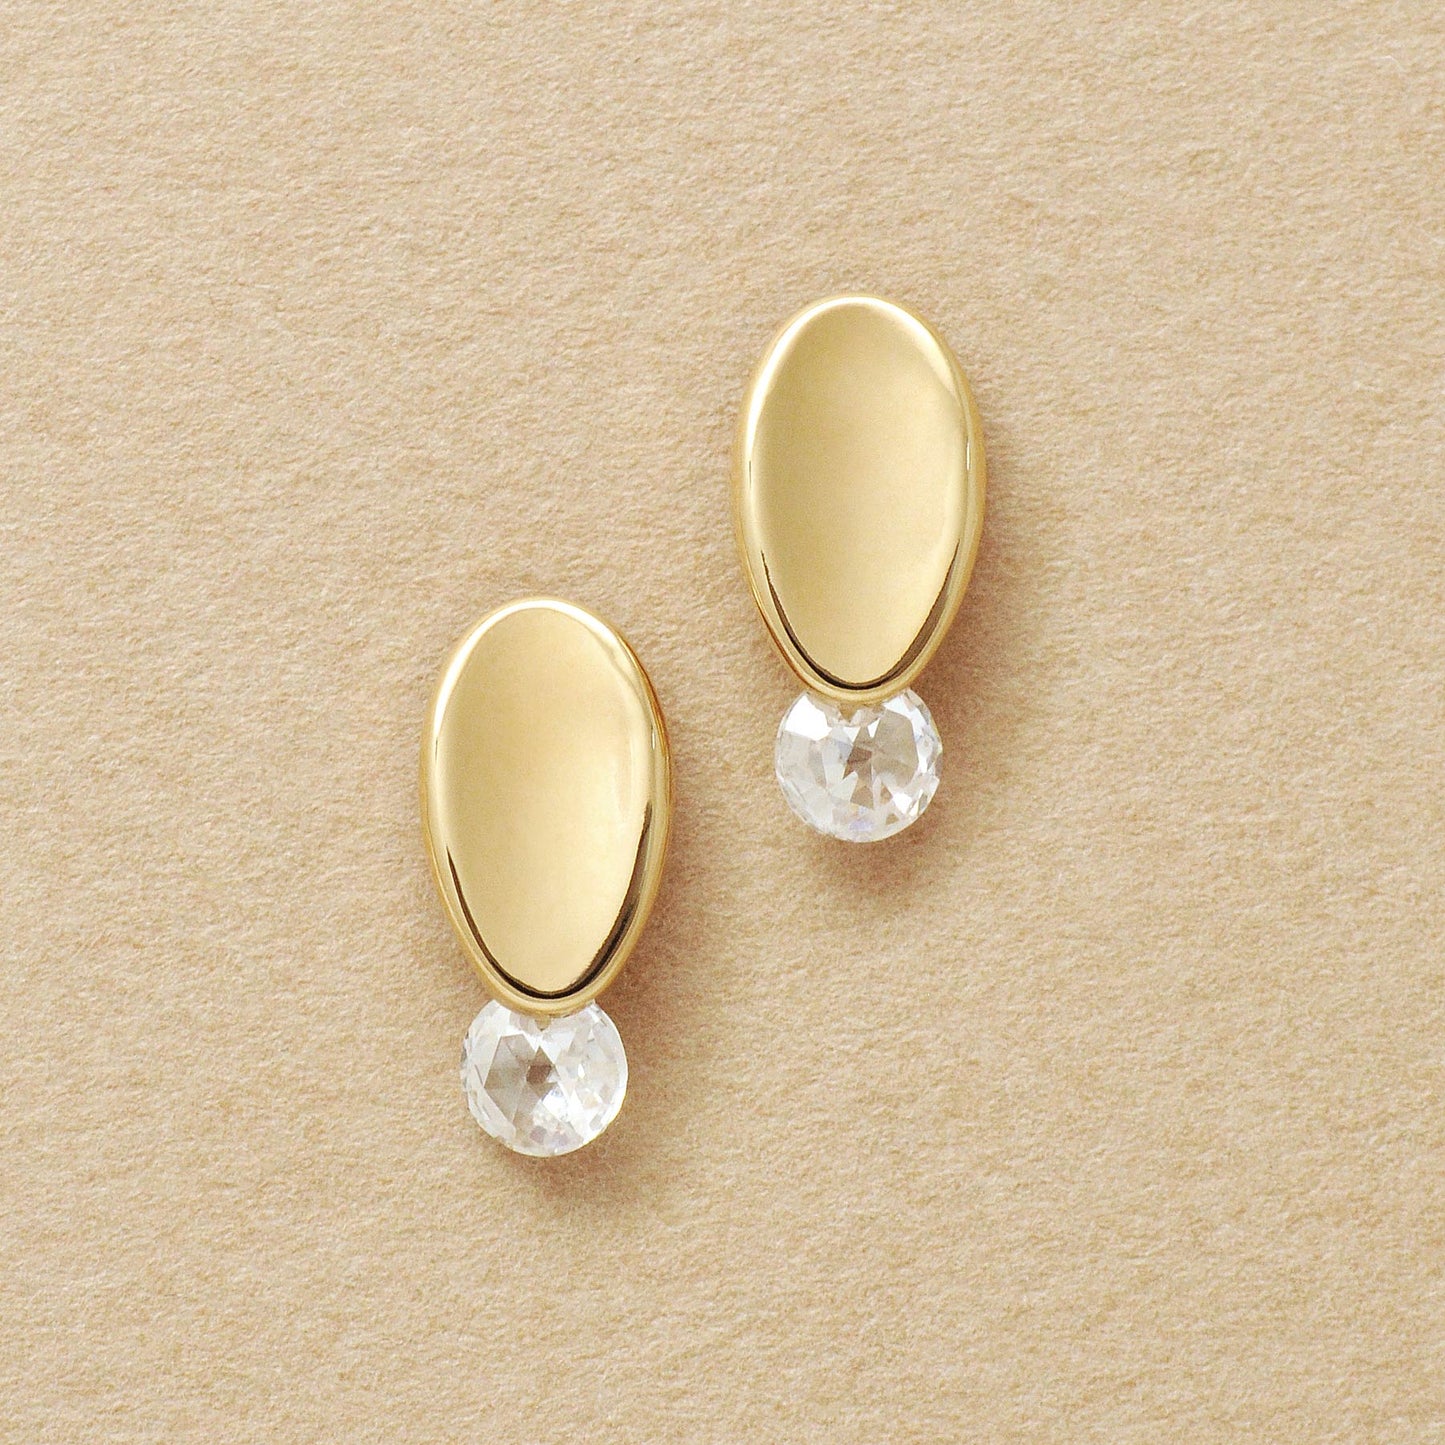 18K/10K Stylish Oval Earrings (Yellow Gold) - Product Image